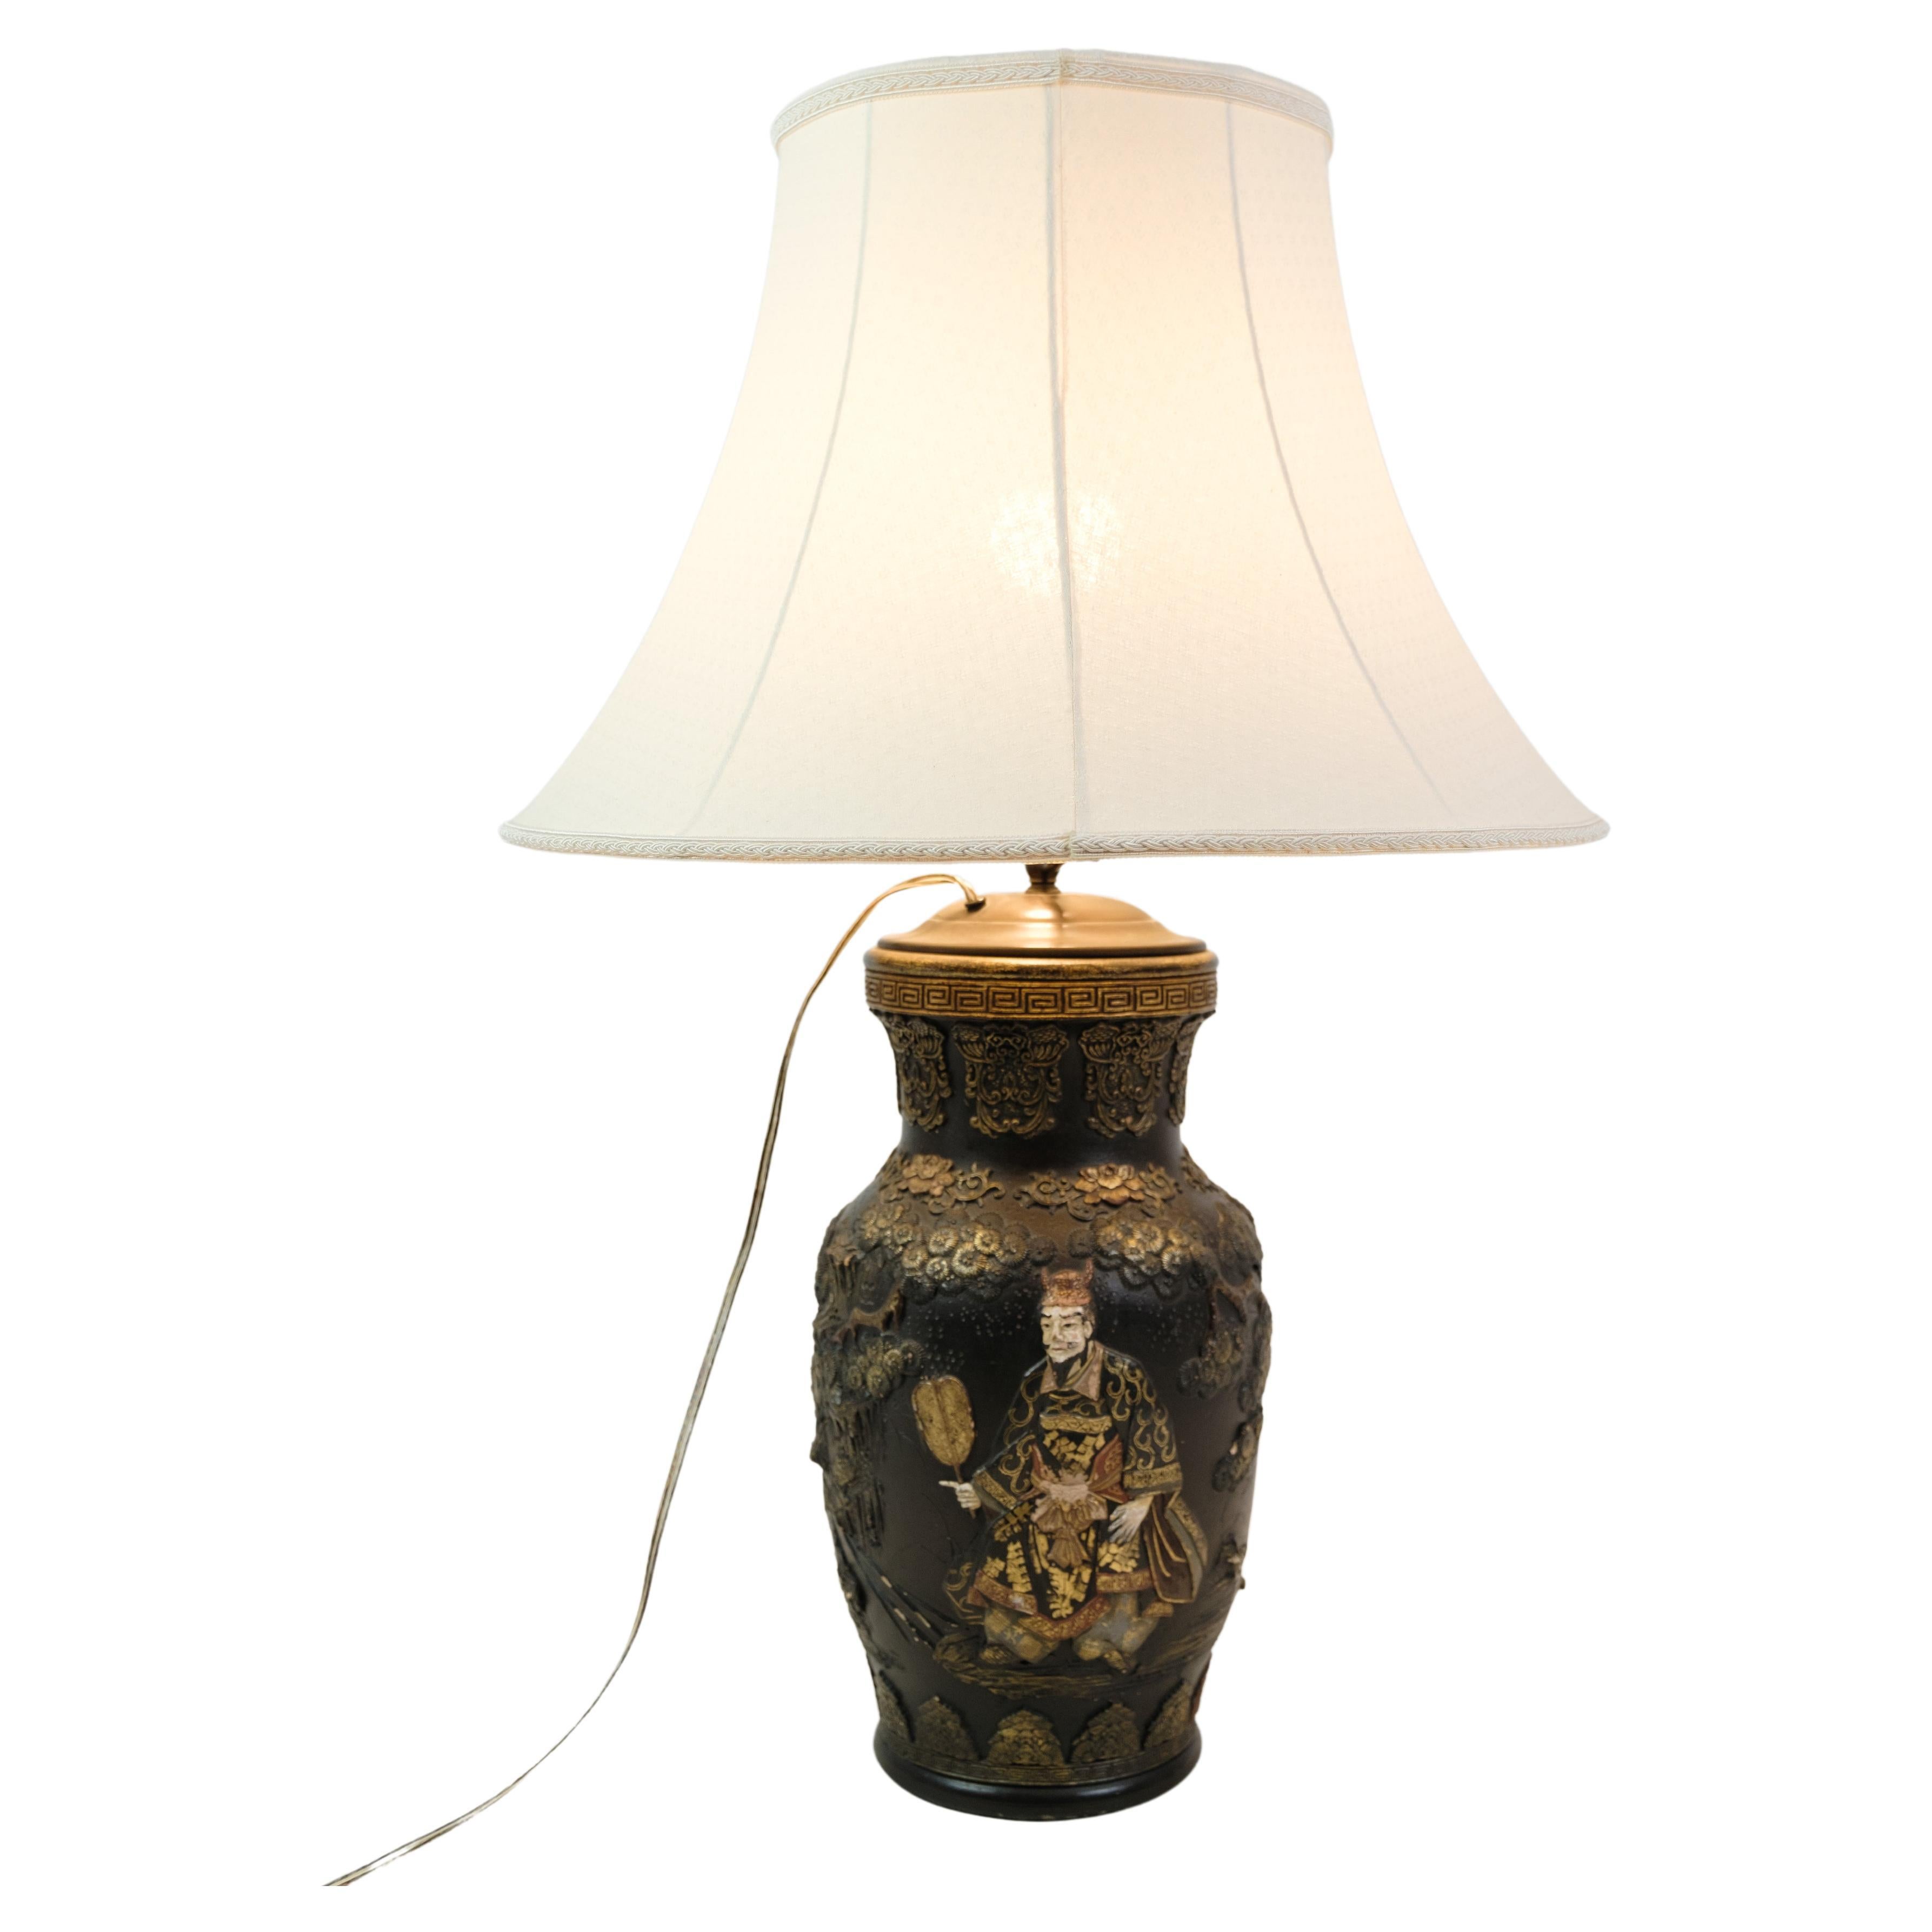 Chinese Lamp, Detailed Carvings & Motif, 1920s